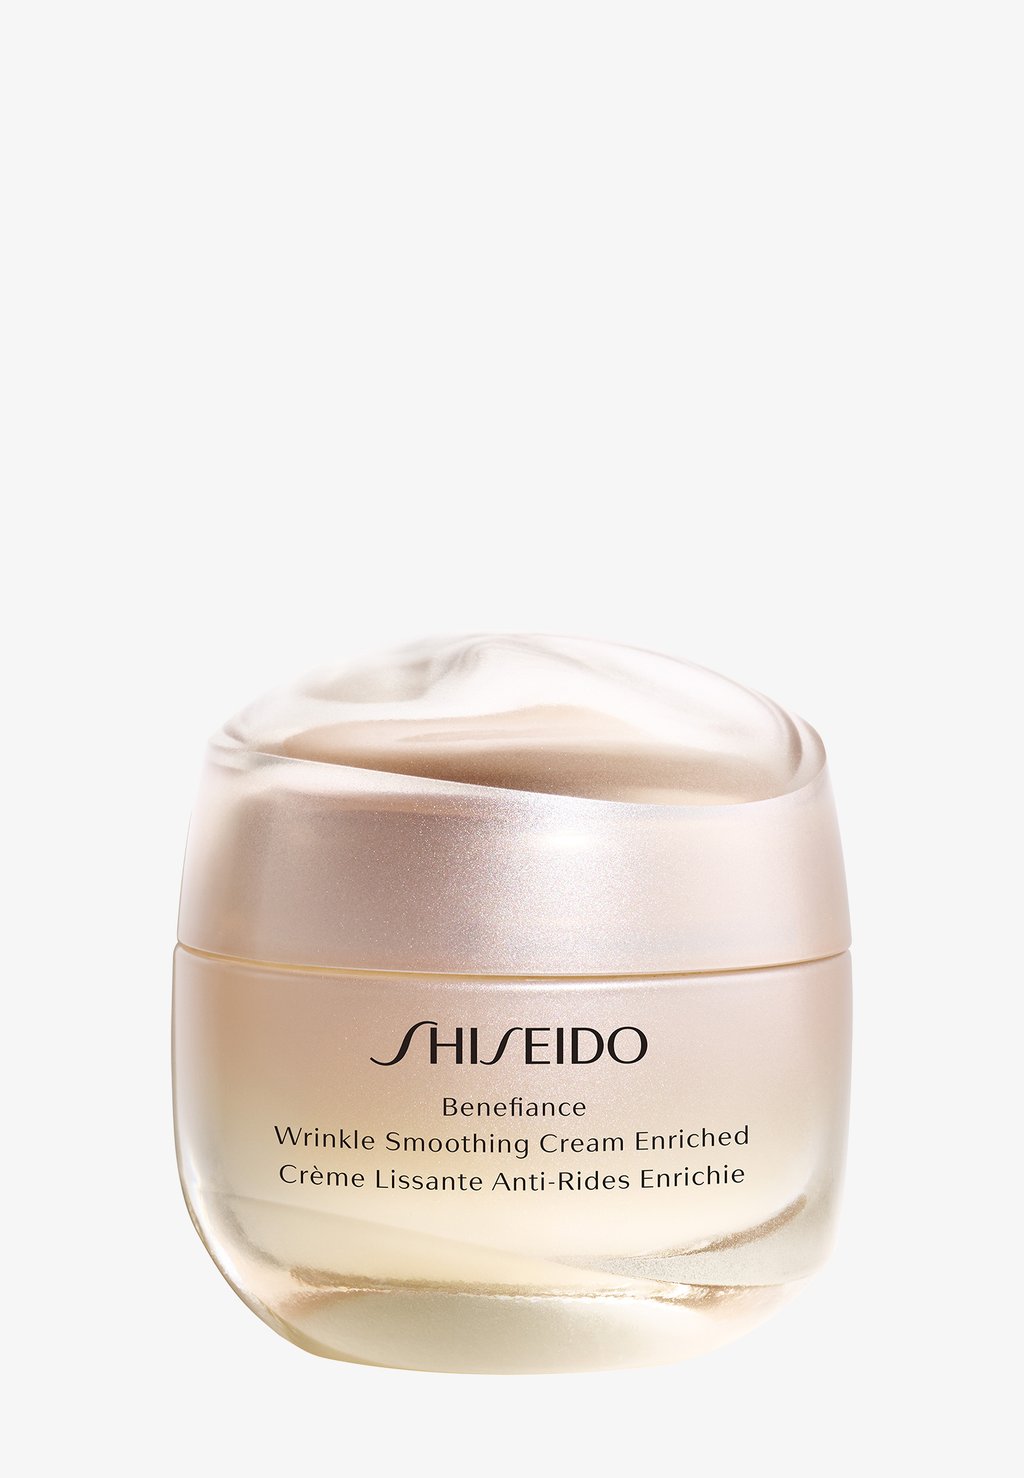 Дневной крем Benefiance Wrinkle Smoothing Cream Enriched Shiseido крем против морщин benefiance wrinkle smoothing cream enriched shiseido 50 мл